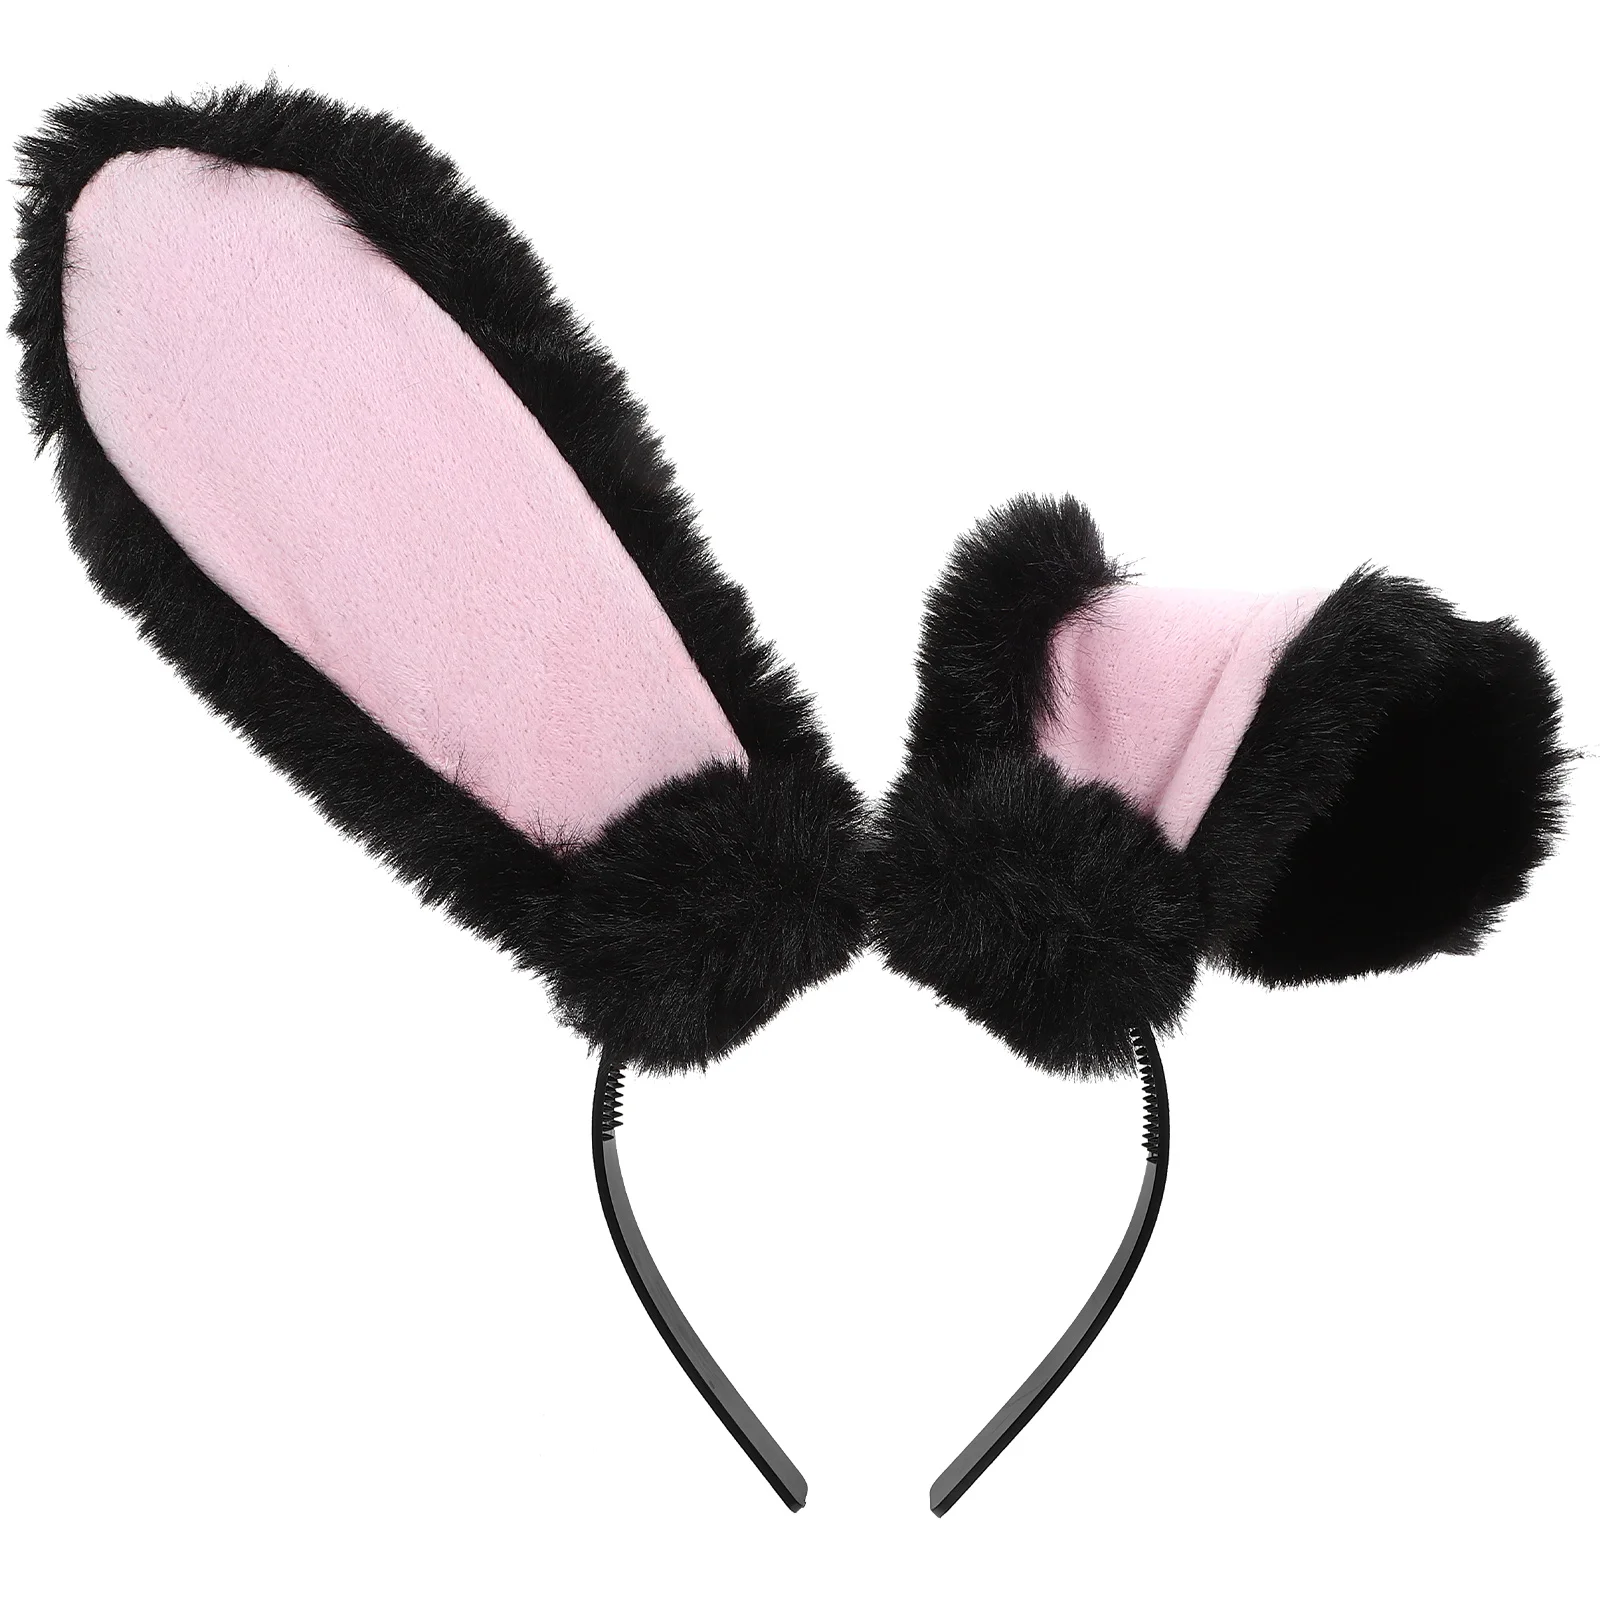 

Bunny Ears Headband Easter Rabbit Ears Hair Hoop Plush Animal Ear Hair Bands Hair Accessories Gifts Girls Cosplay Party Favors